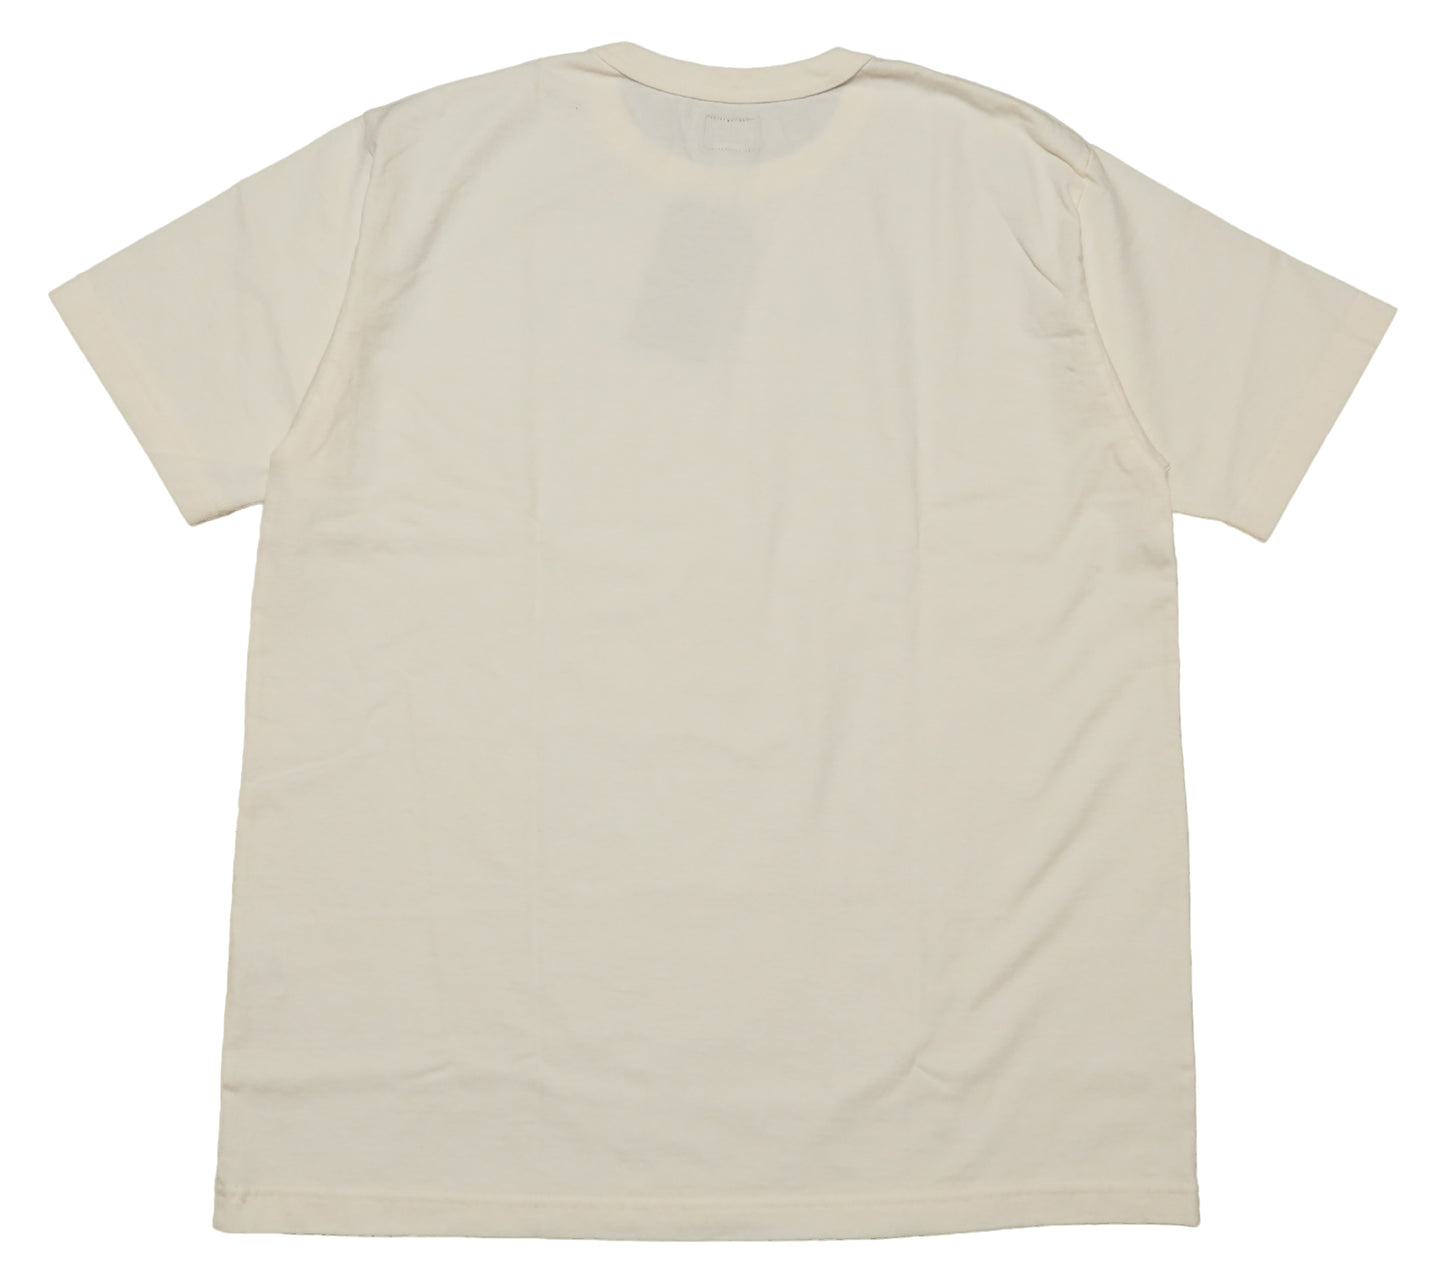 GUNZ ガンズ Tシャツ 半袖 MAISEL'S メンズ 444G085 オフホワイト 日本製